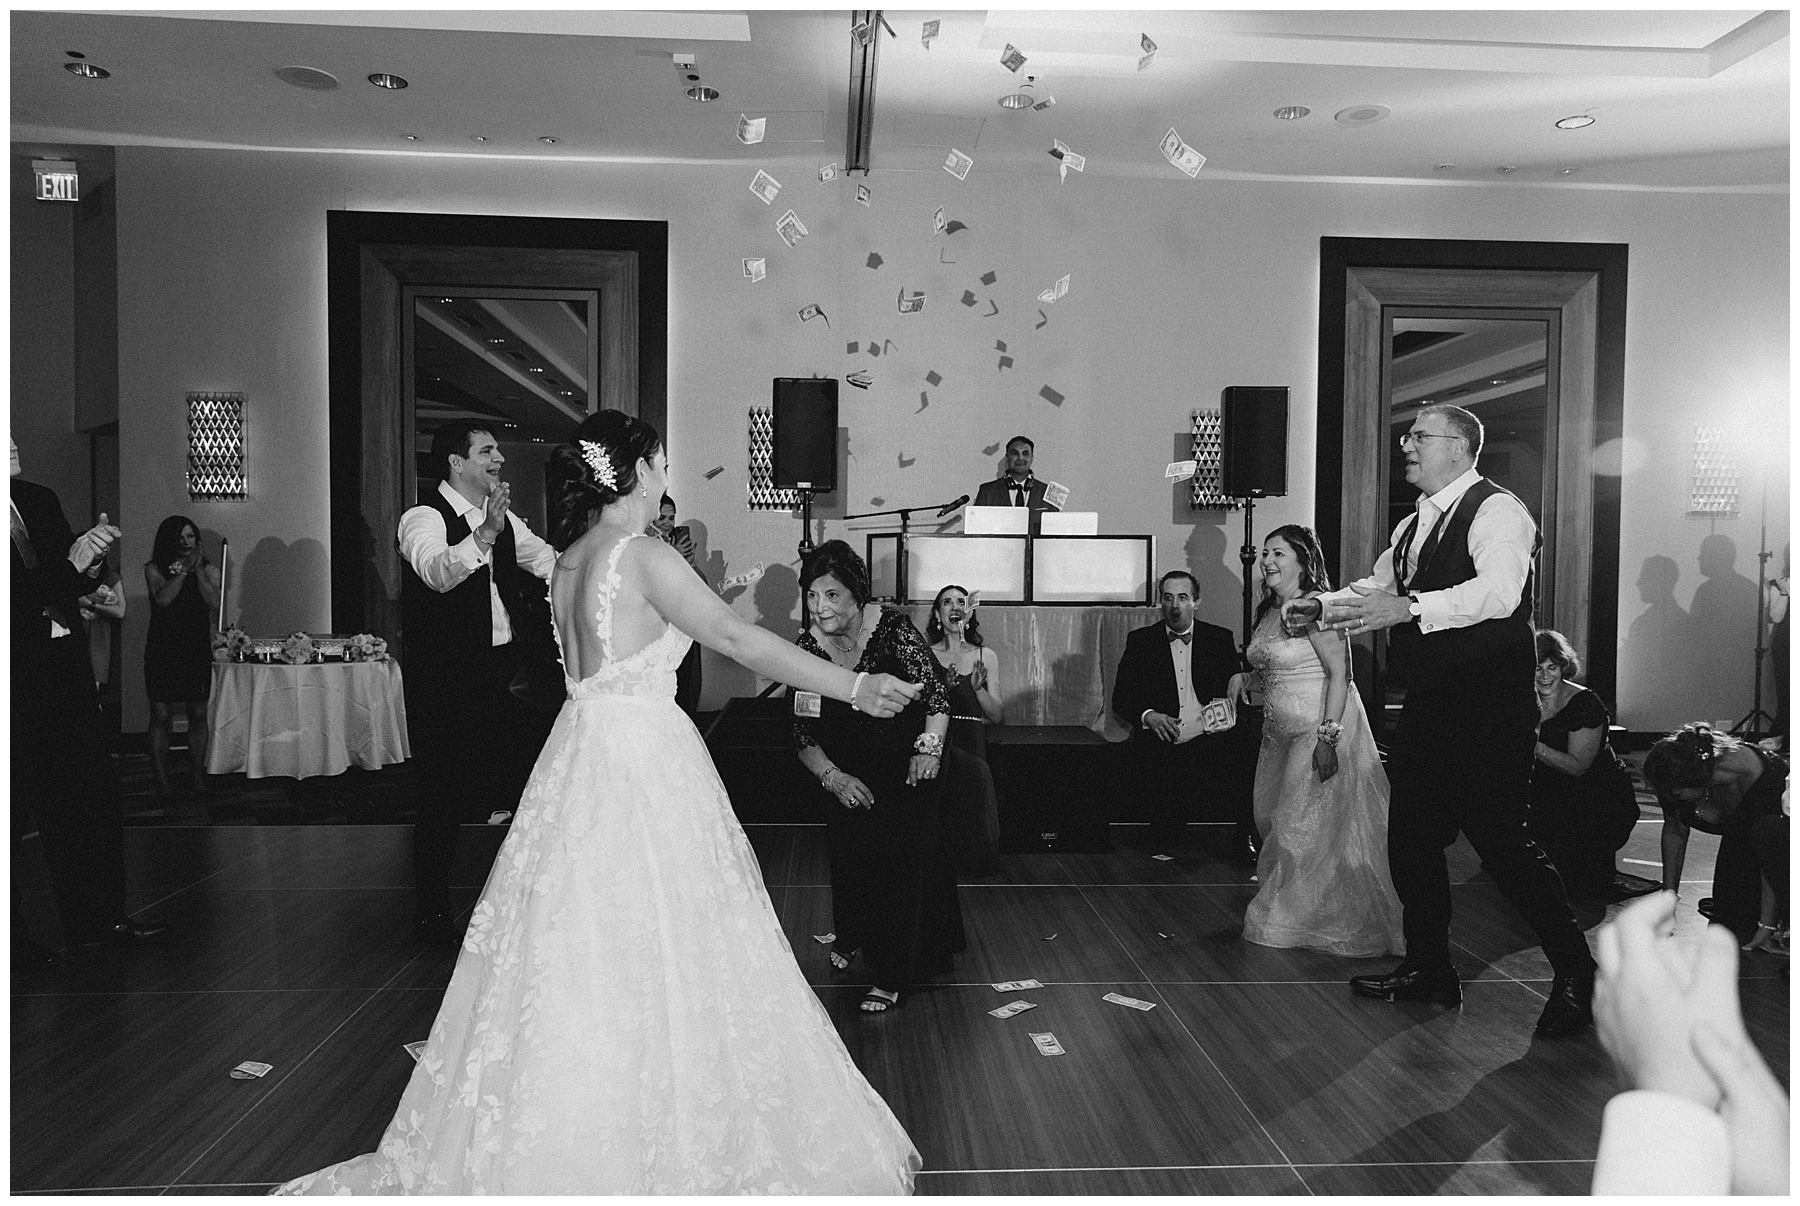 classic greek dances at wedding reception